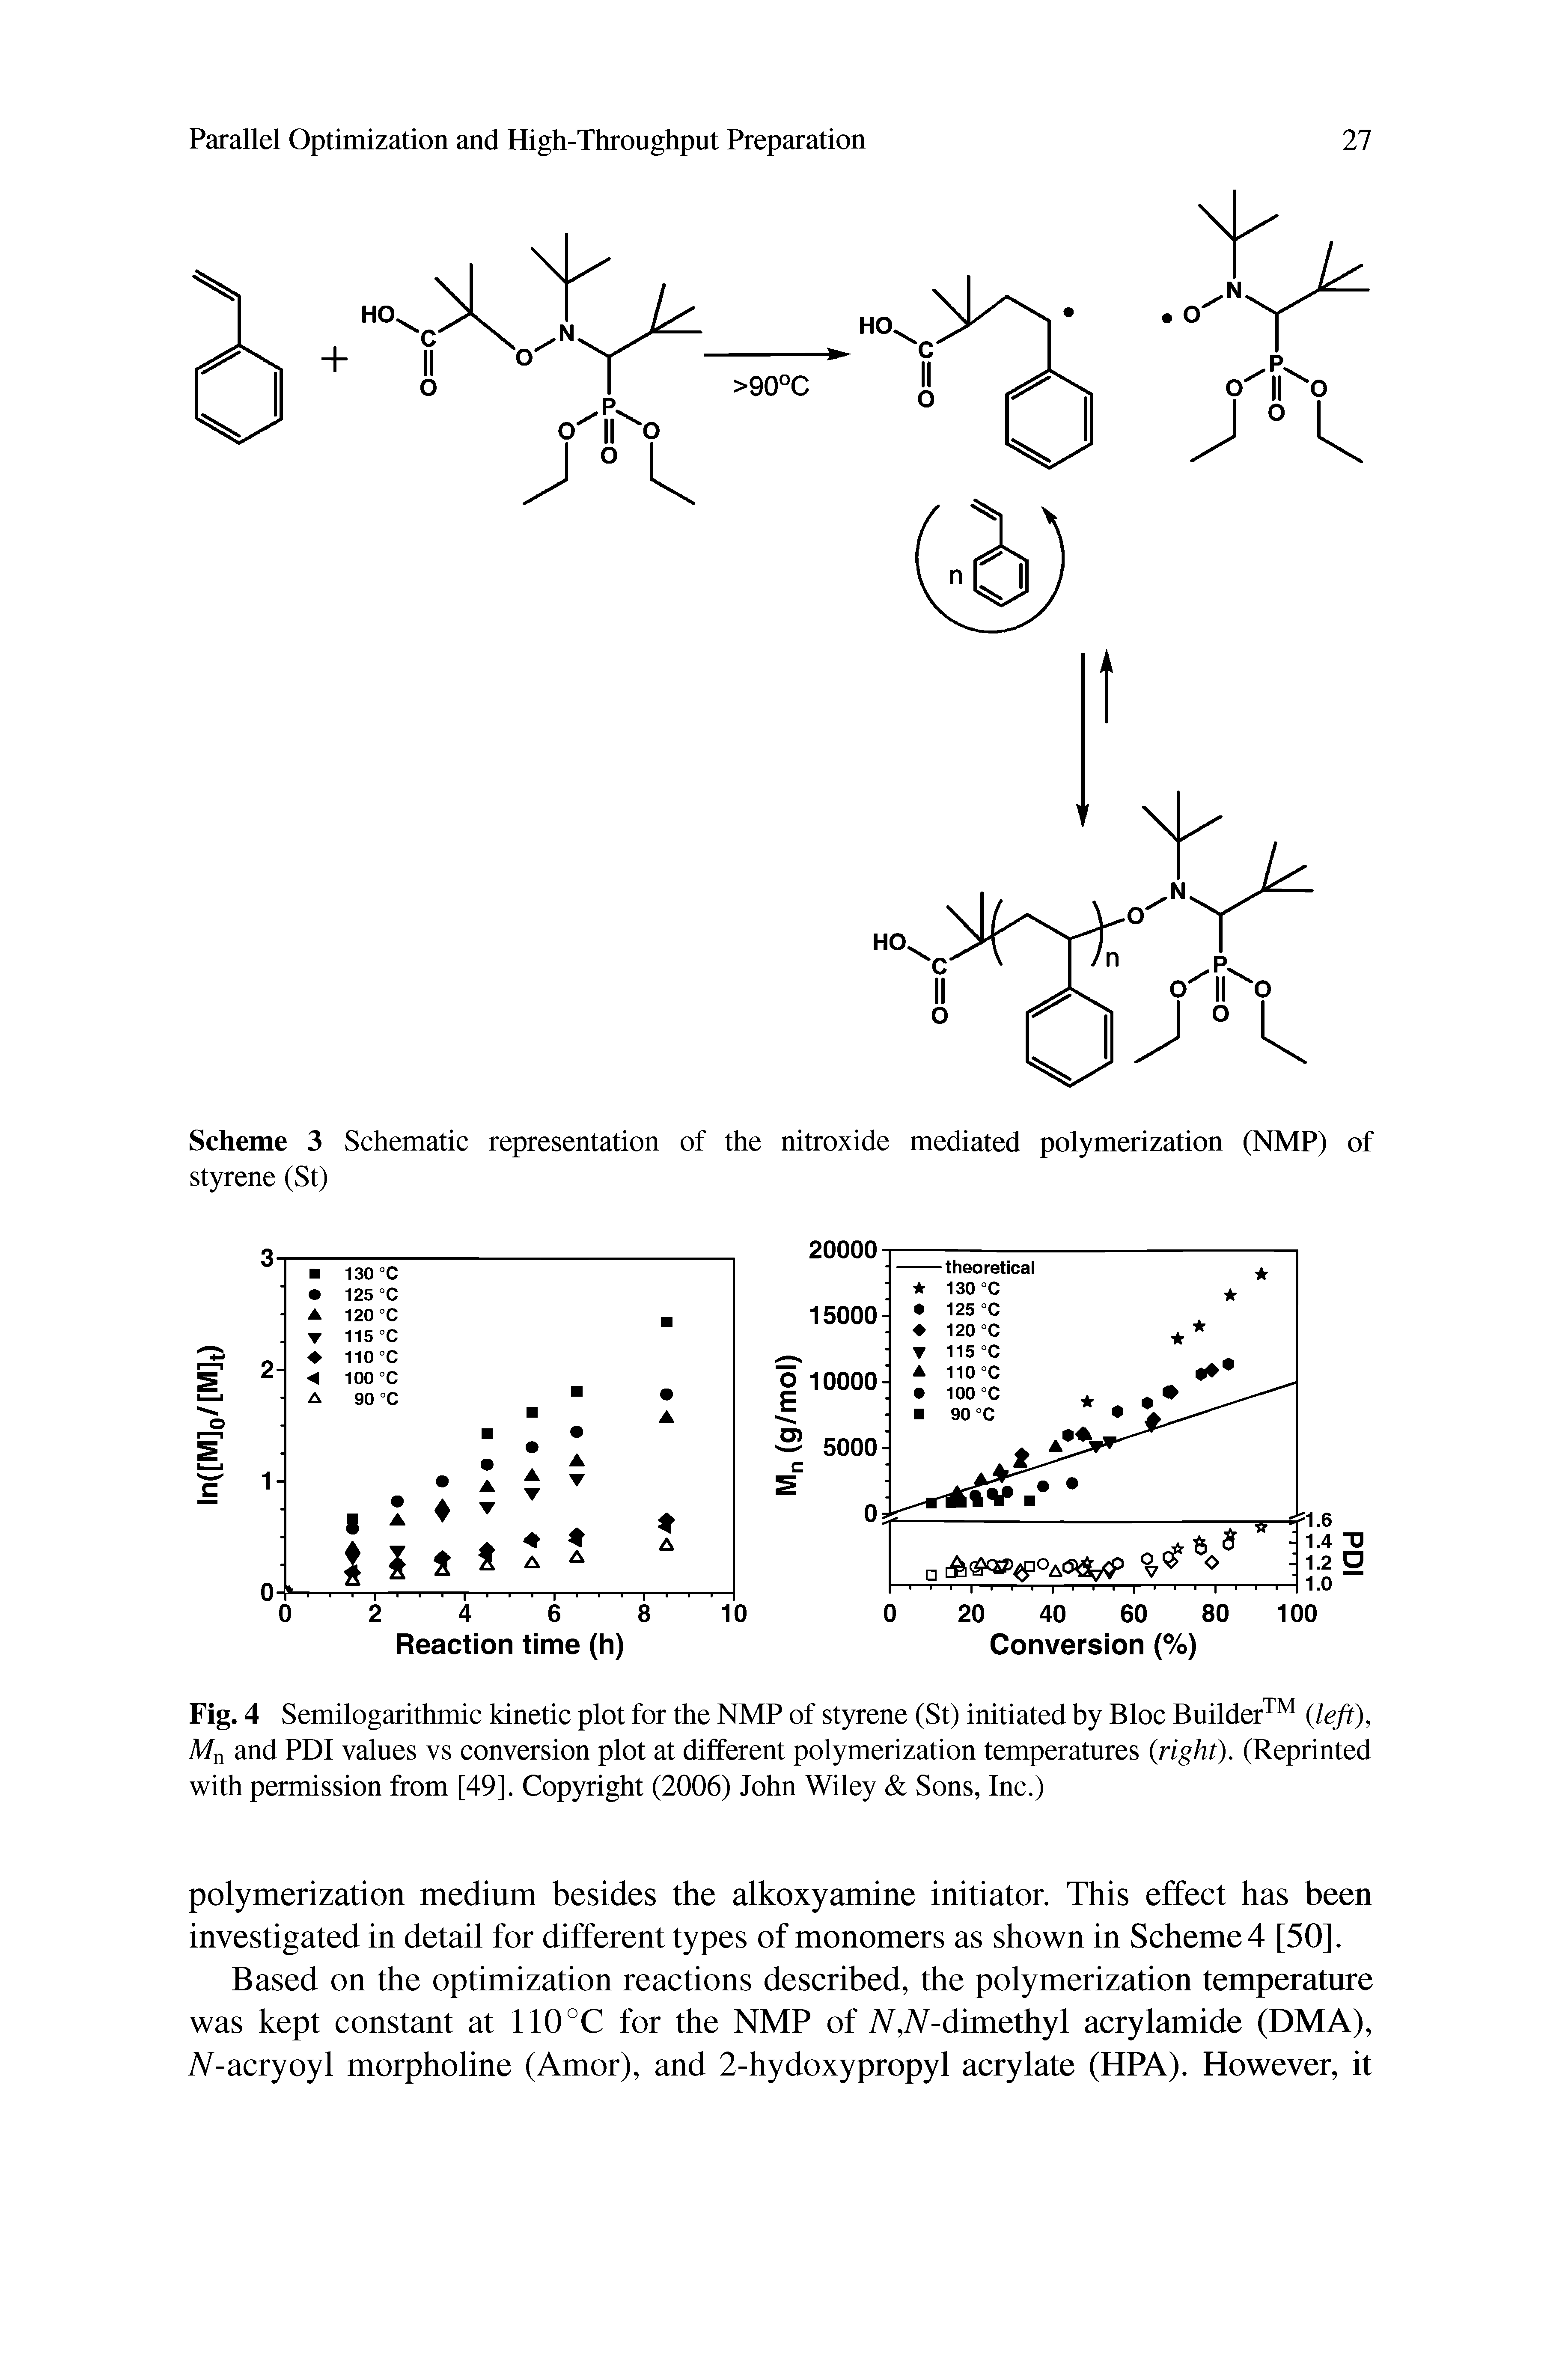 Scheme 3 Schematic representation of the nitroxide mediated polymerization (NMP) of styrene (St)...